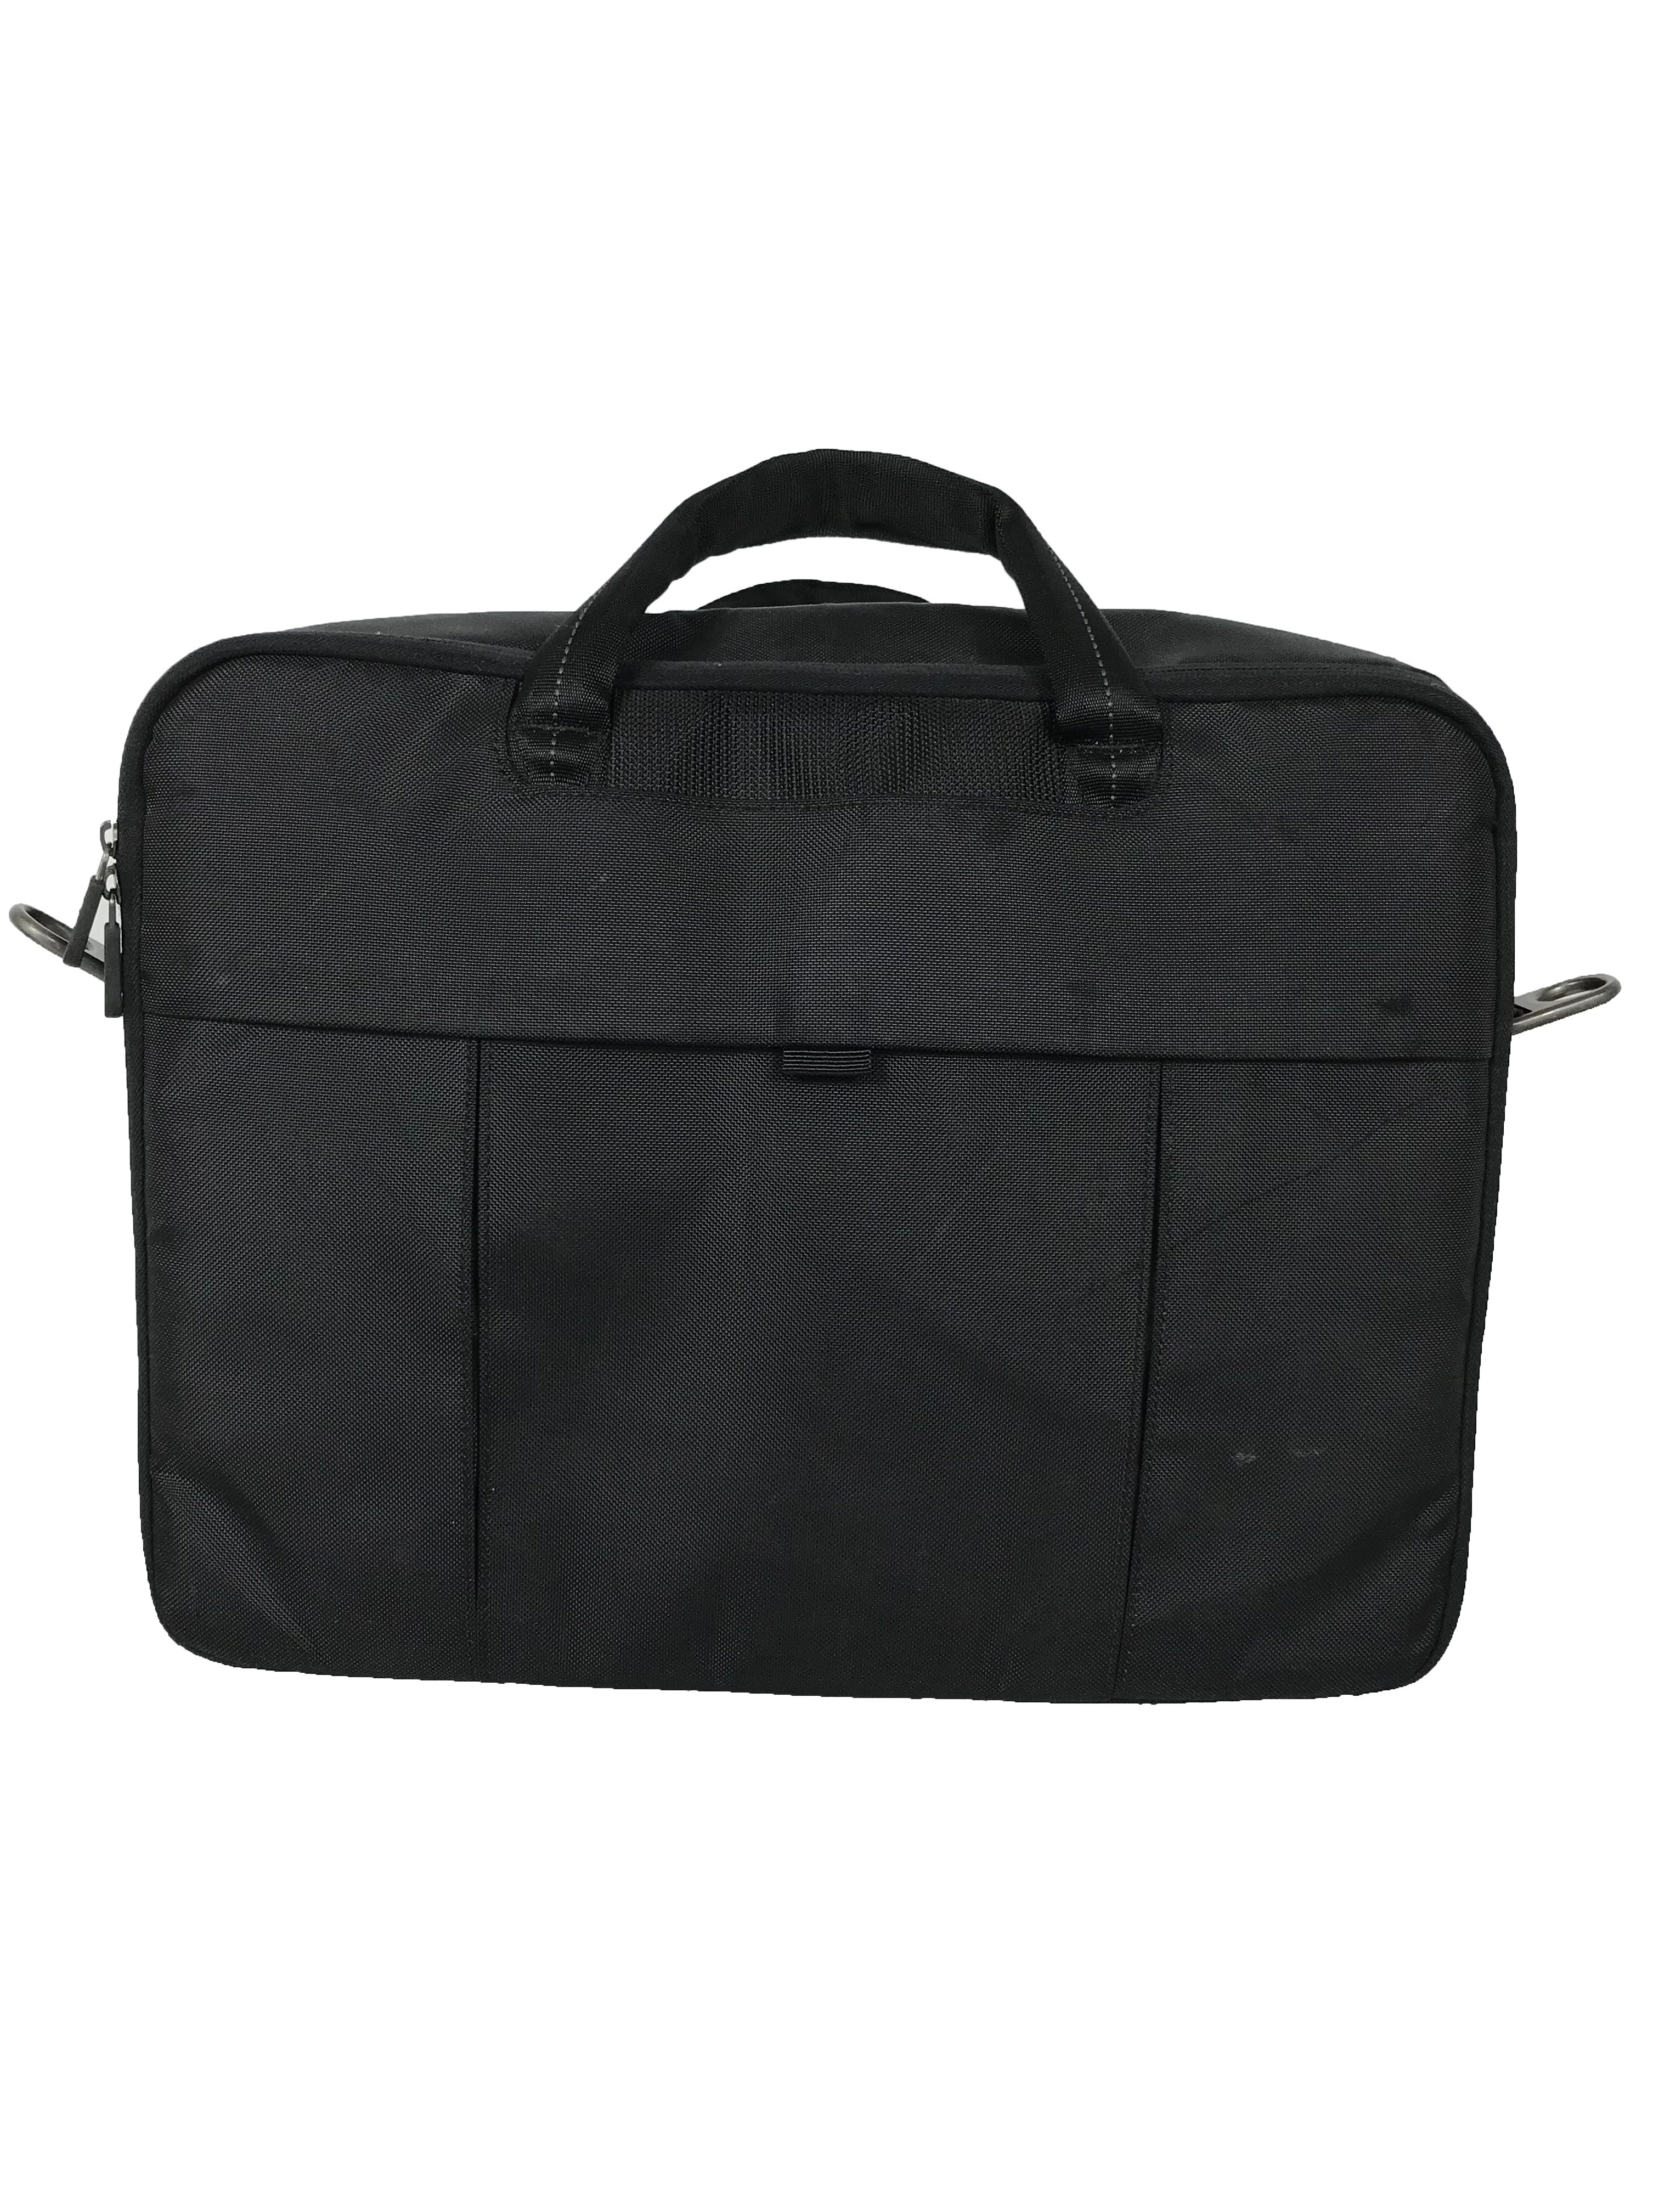 Dell Black Laptop Briefcase Bag